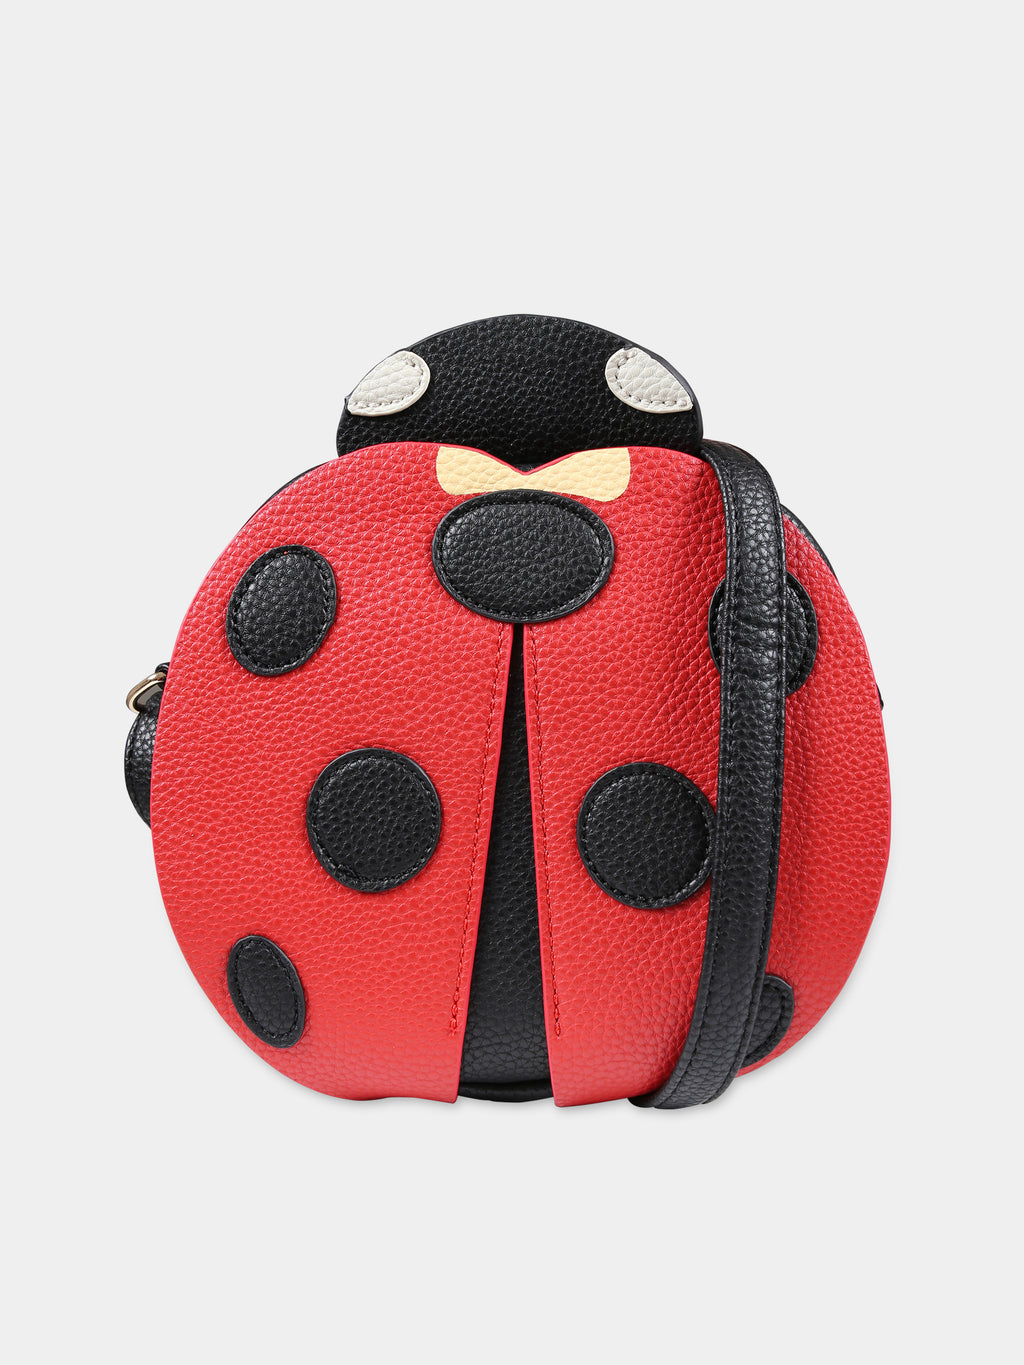 Casual red ladybug-shaped bag for girl